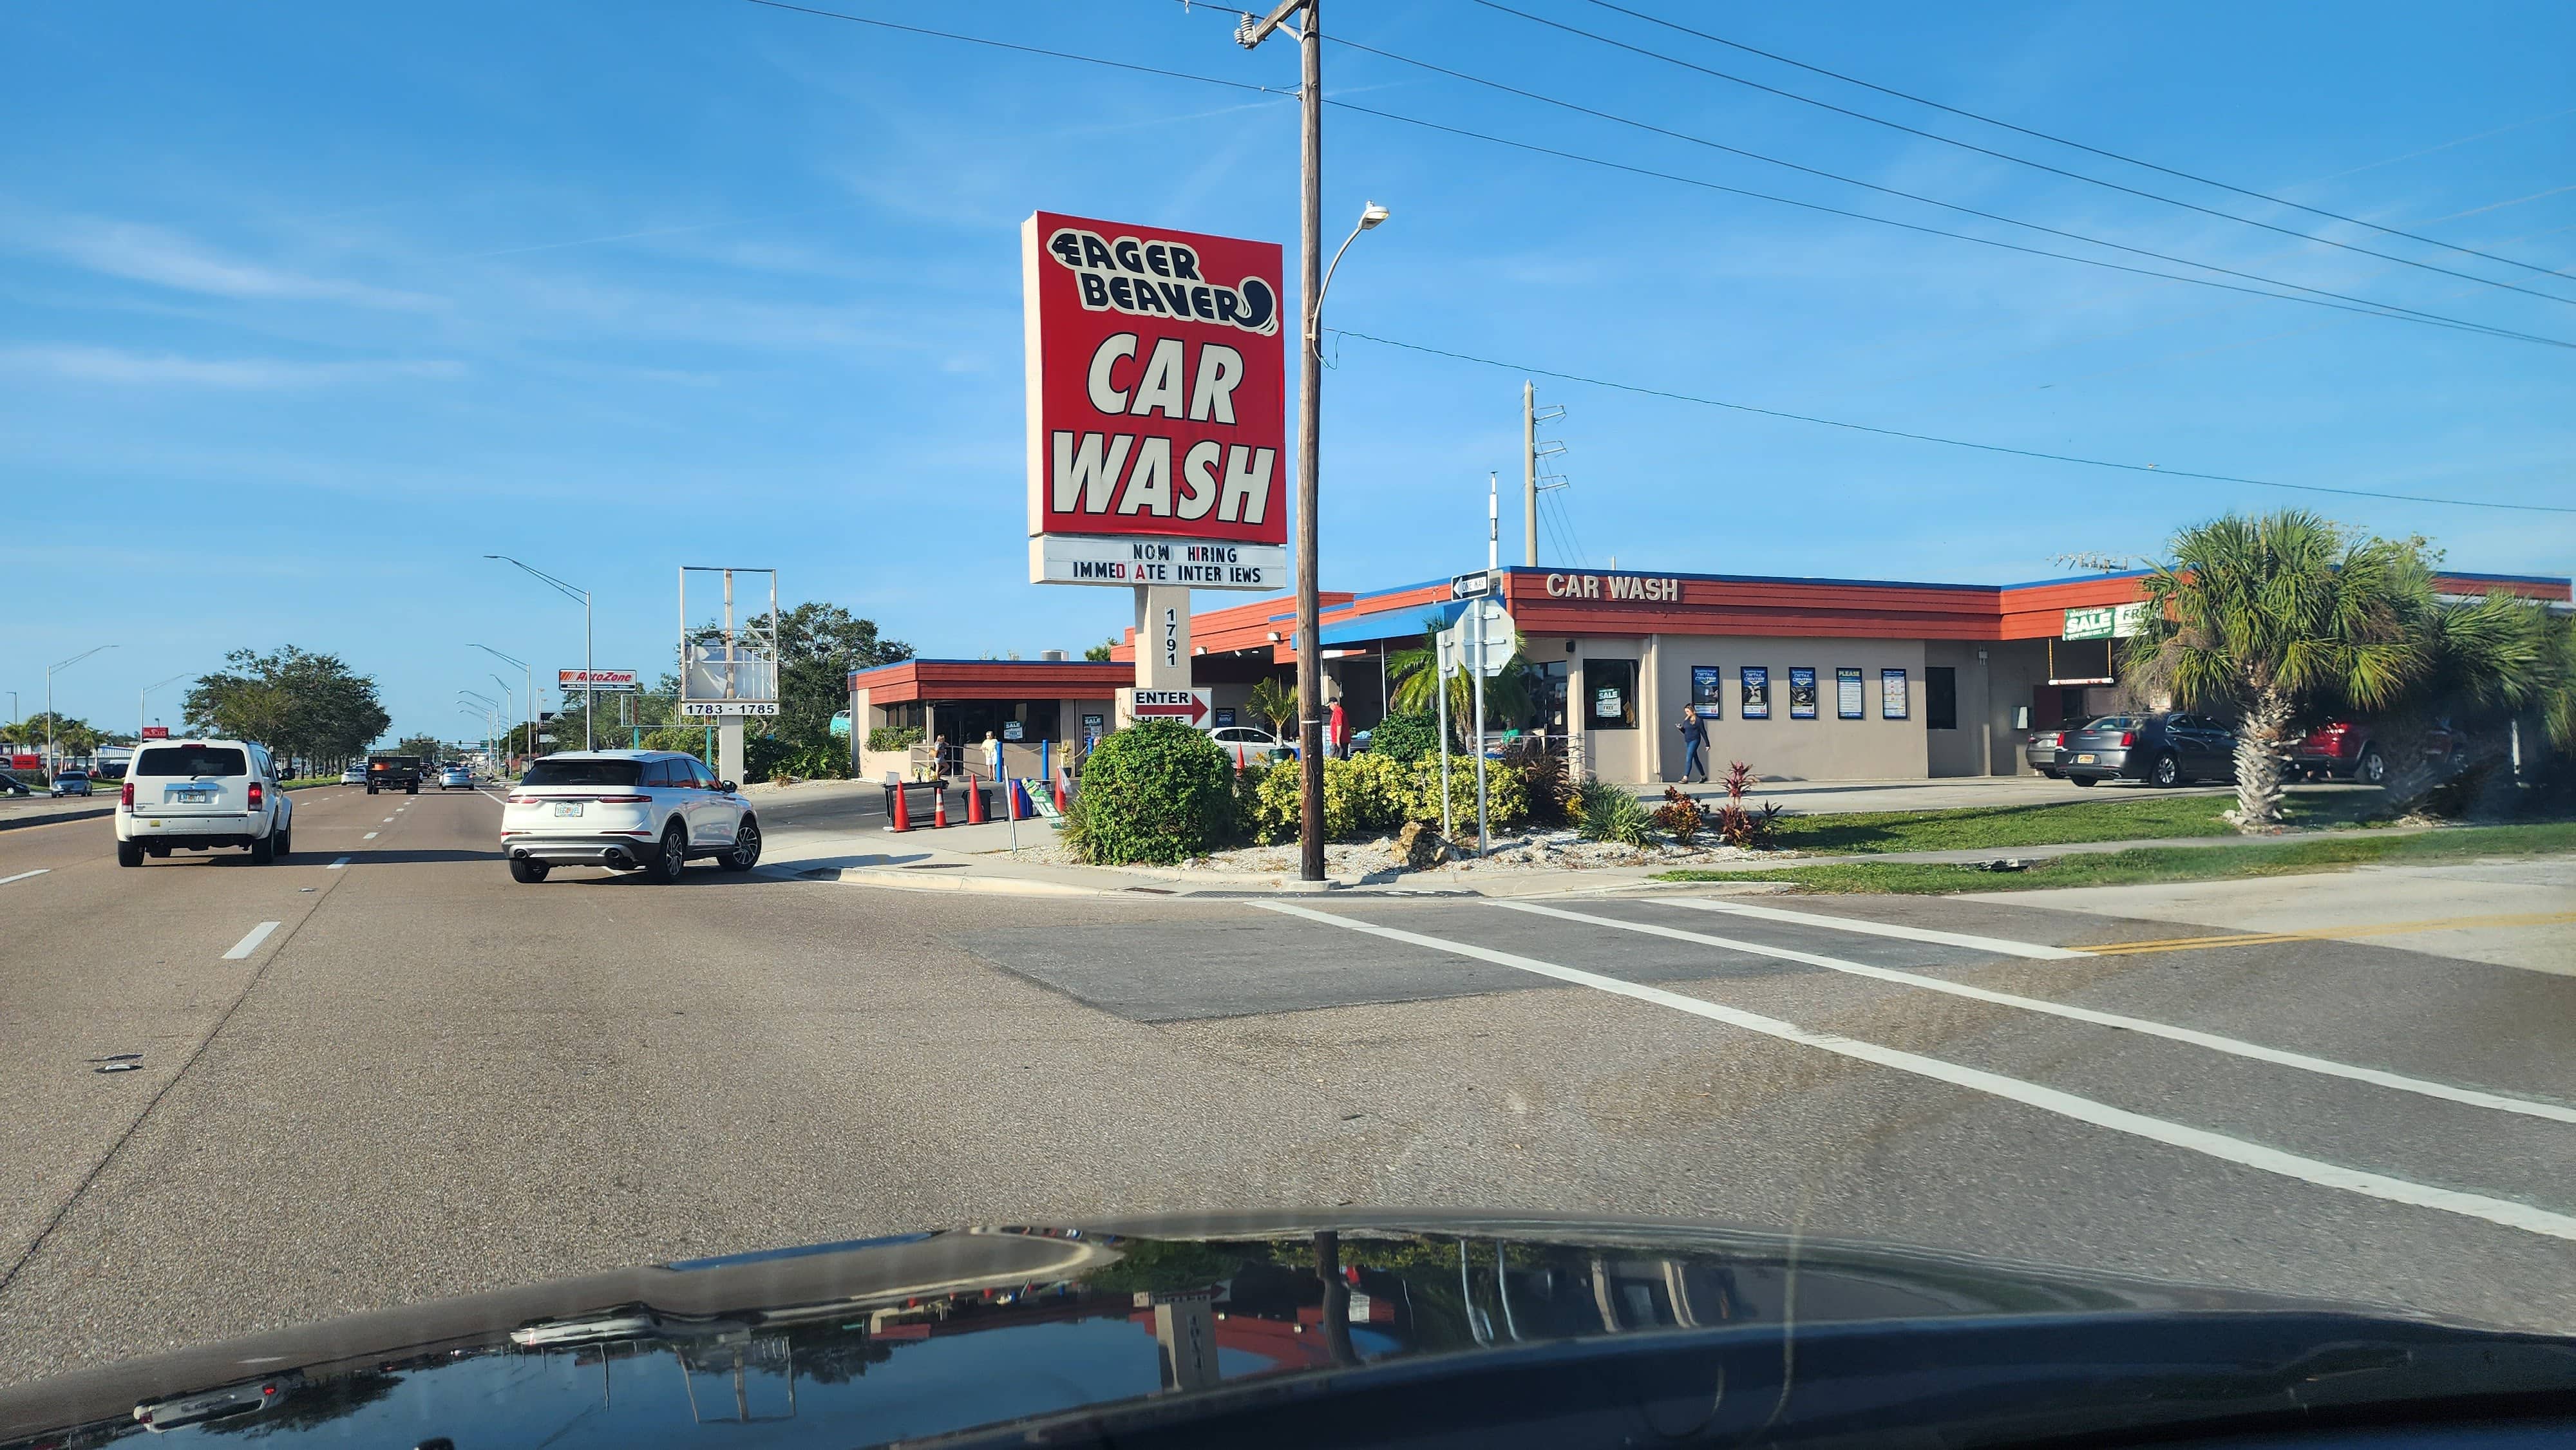 Eager Beaver Car Wash - Venice (FL 34293), US, car wash near me